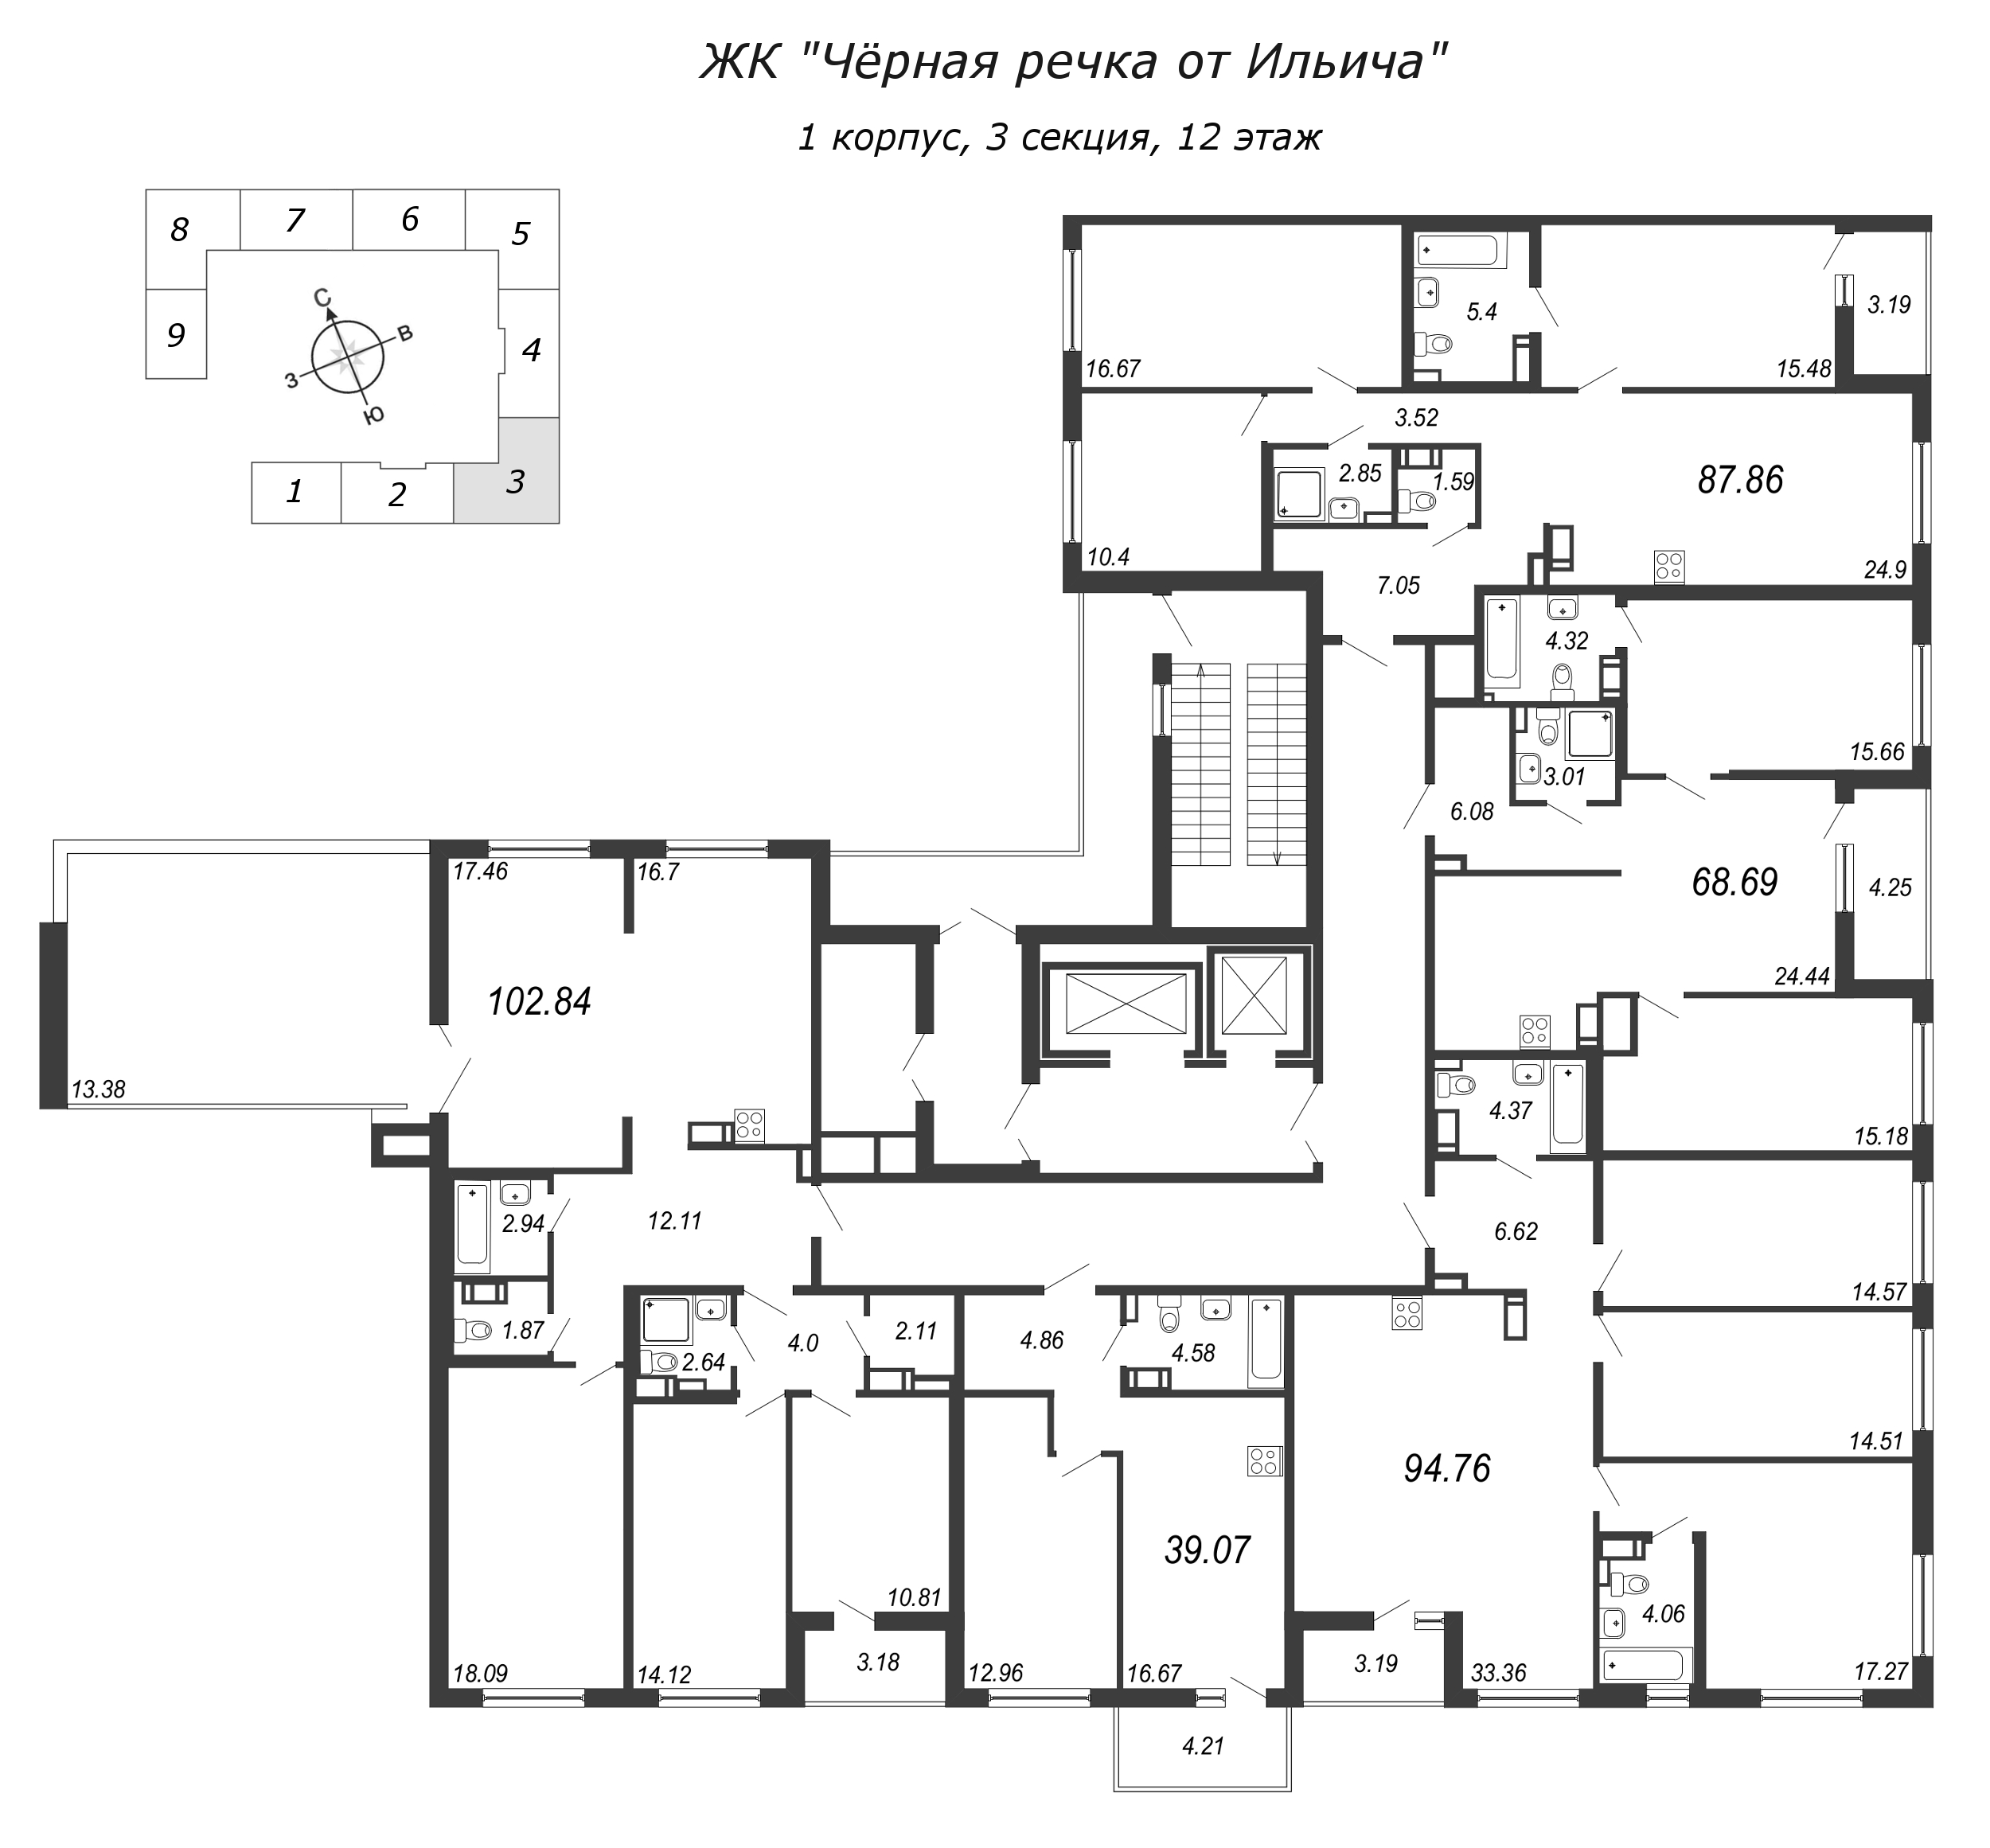 4-комнатная (Евро) квартира, 102.84 м² - планировка этажа